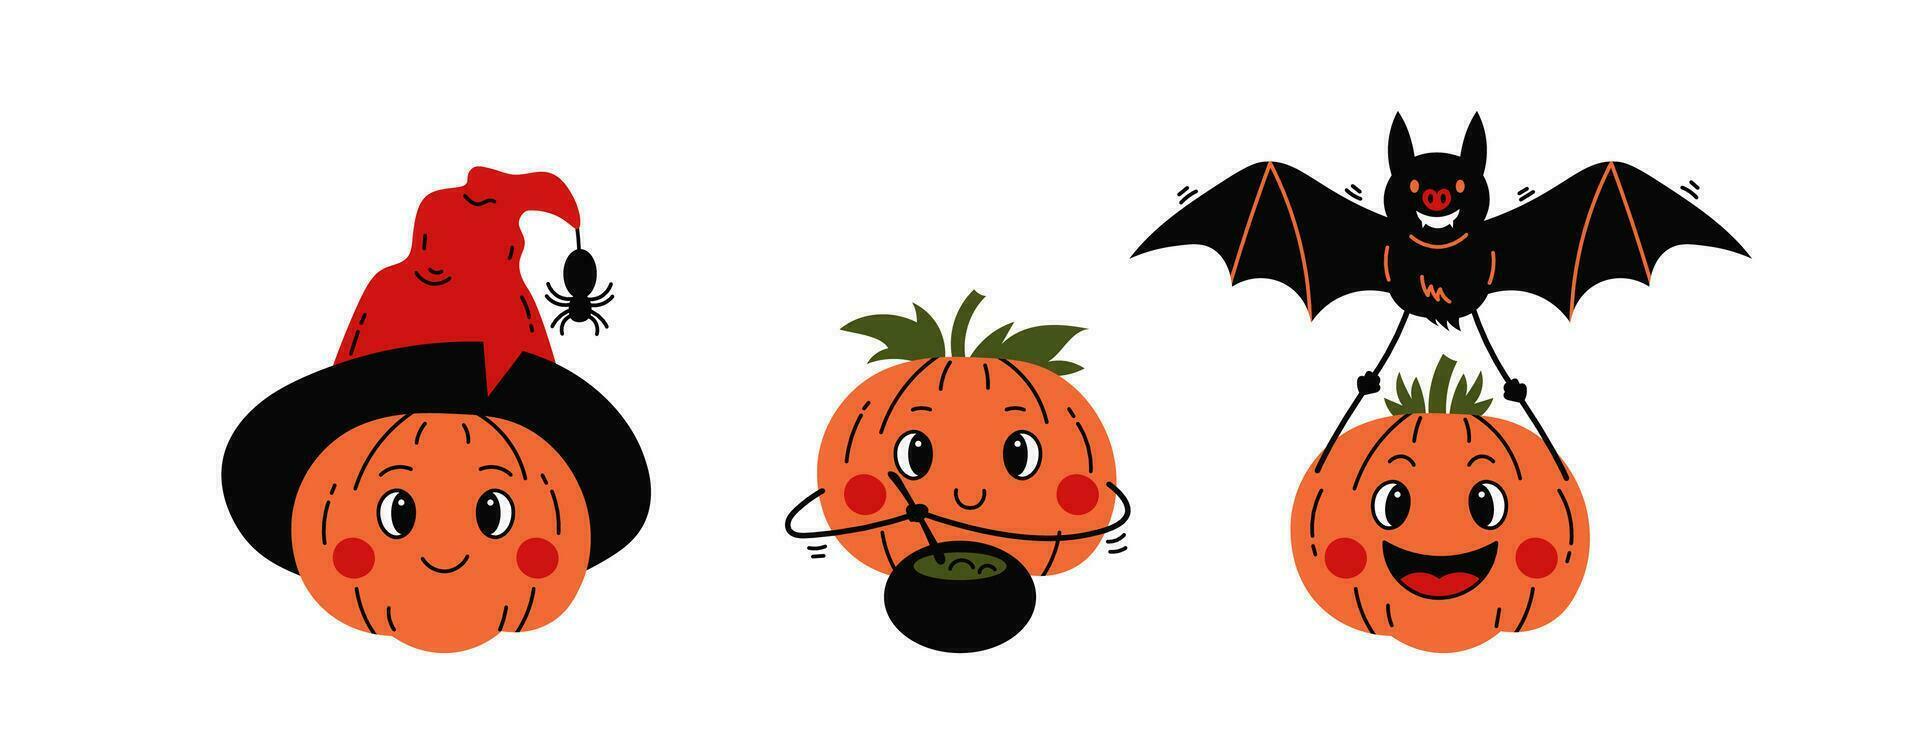 Halloween adorable pumpkins set vector